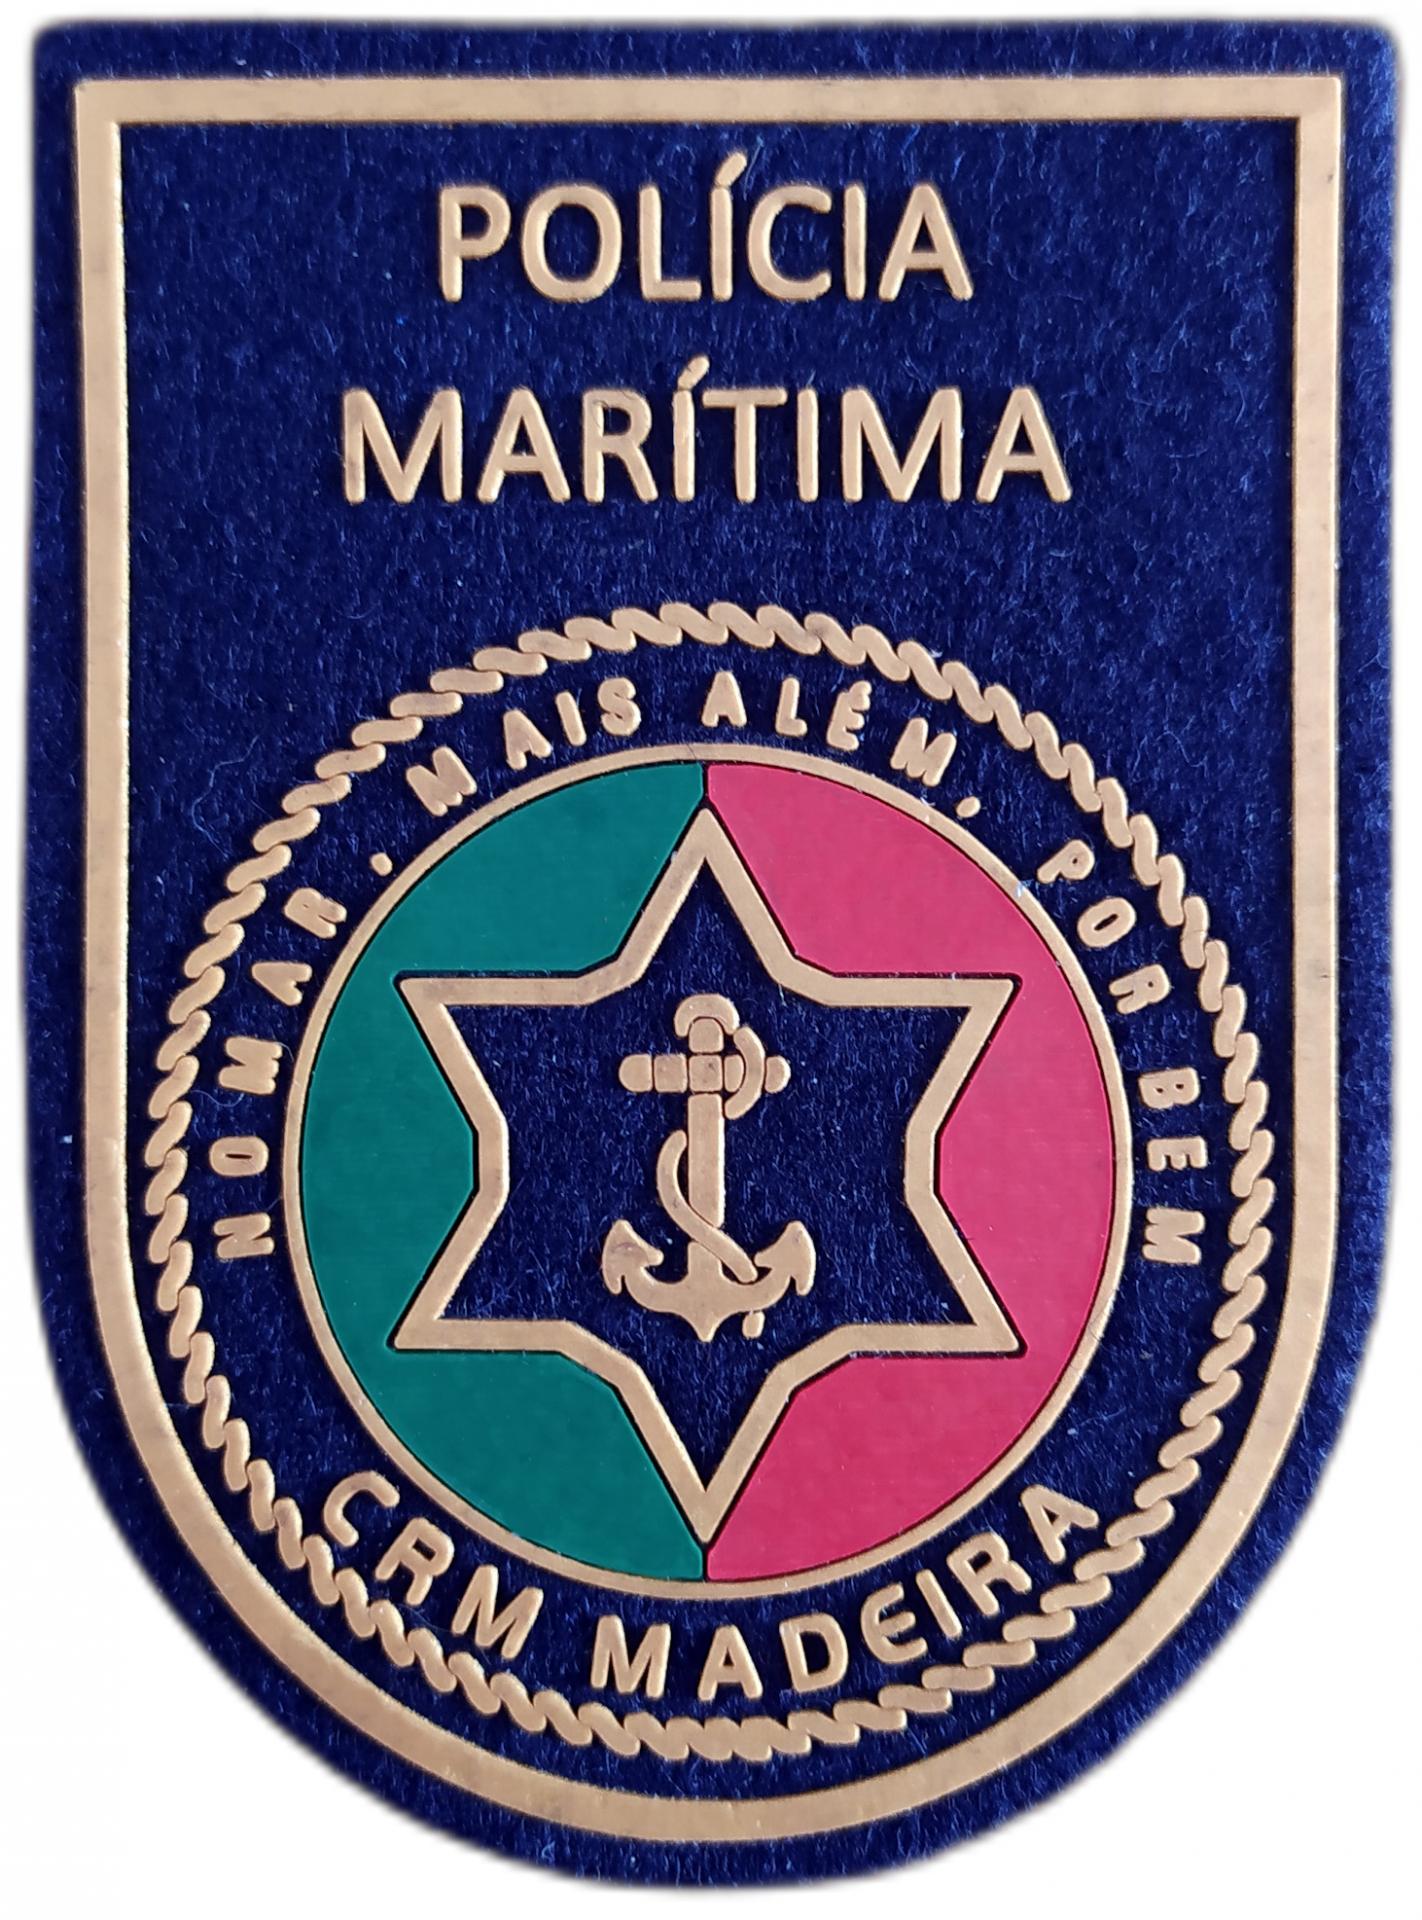 Policía Marítima de Portugal CRM Madeira parche insignia emblema distintivo Sea Police